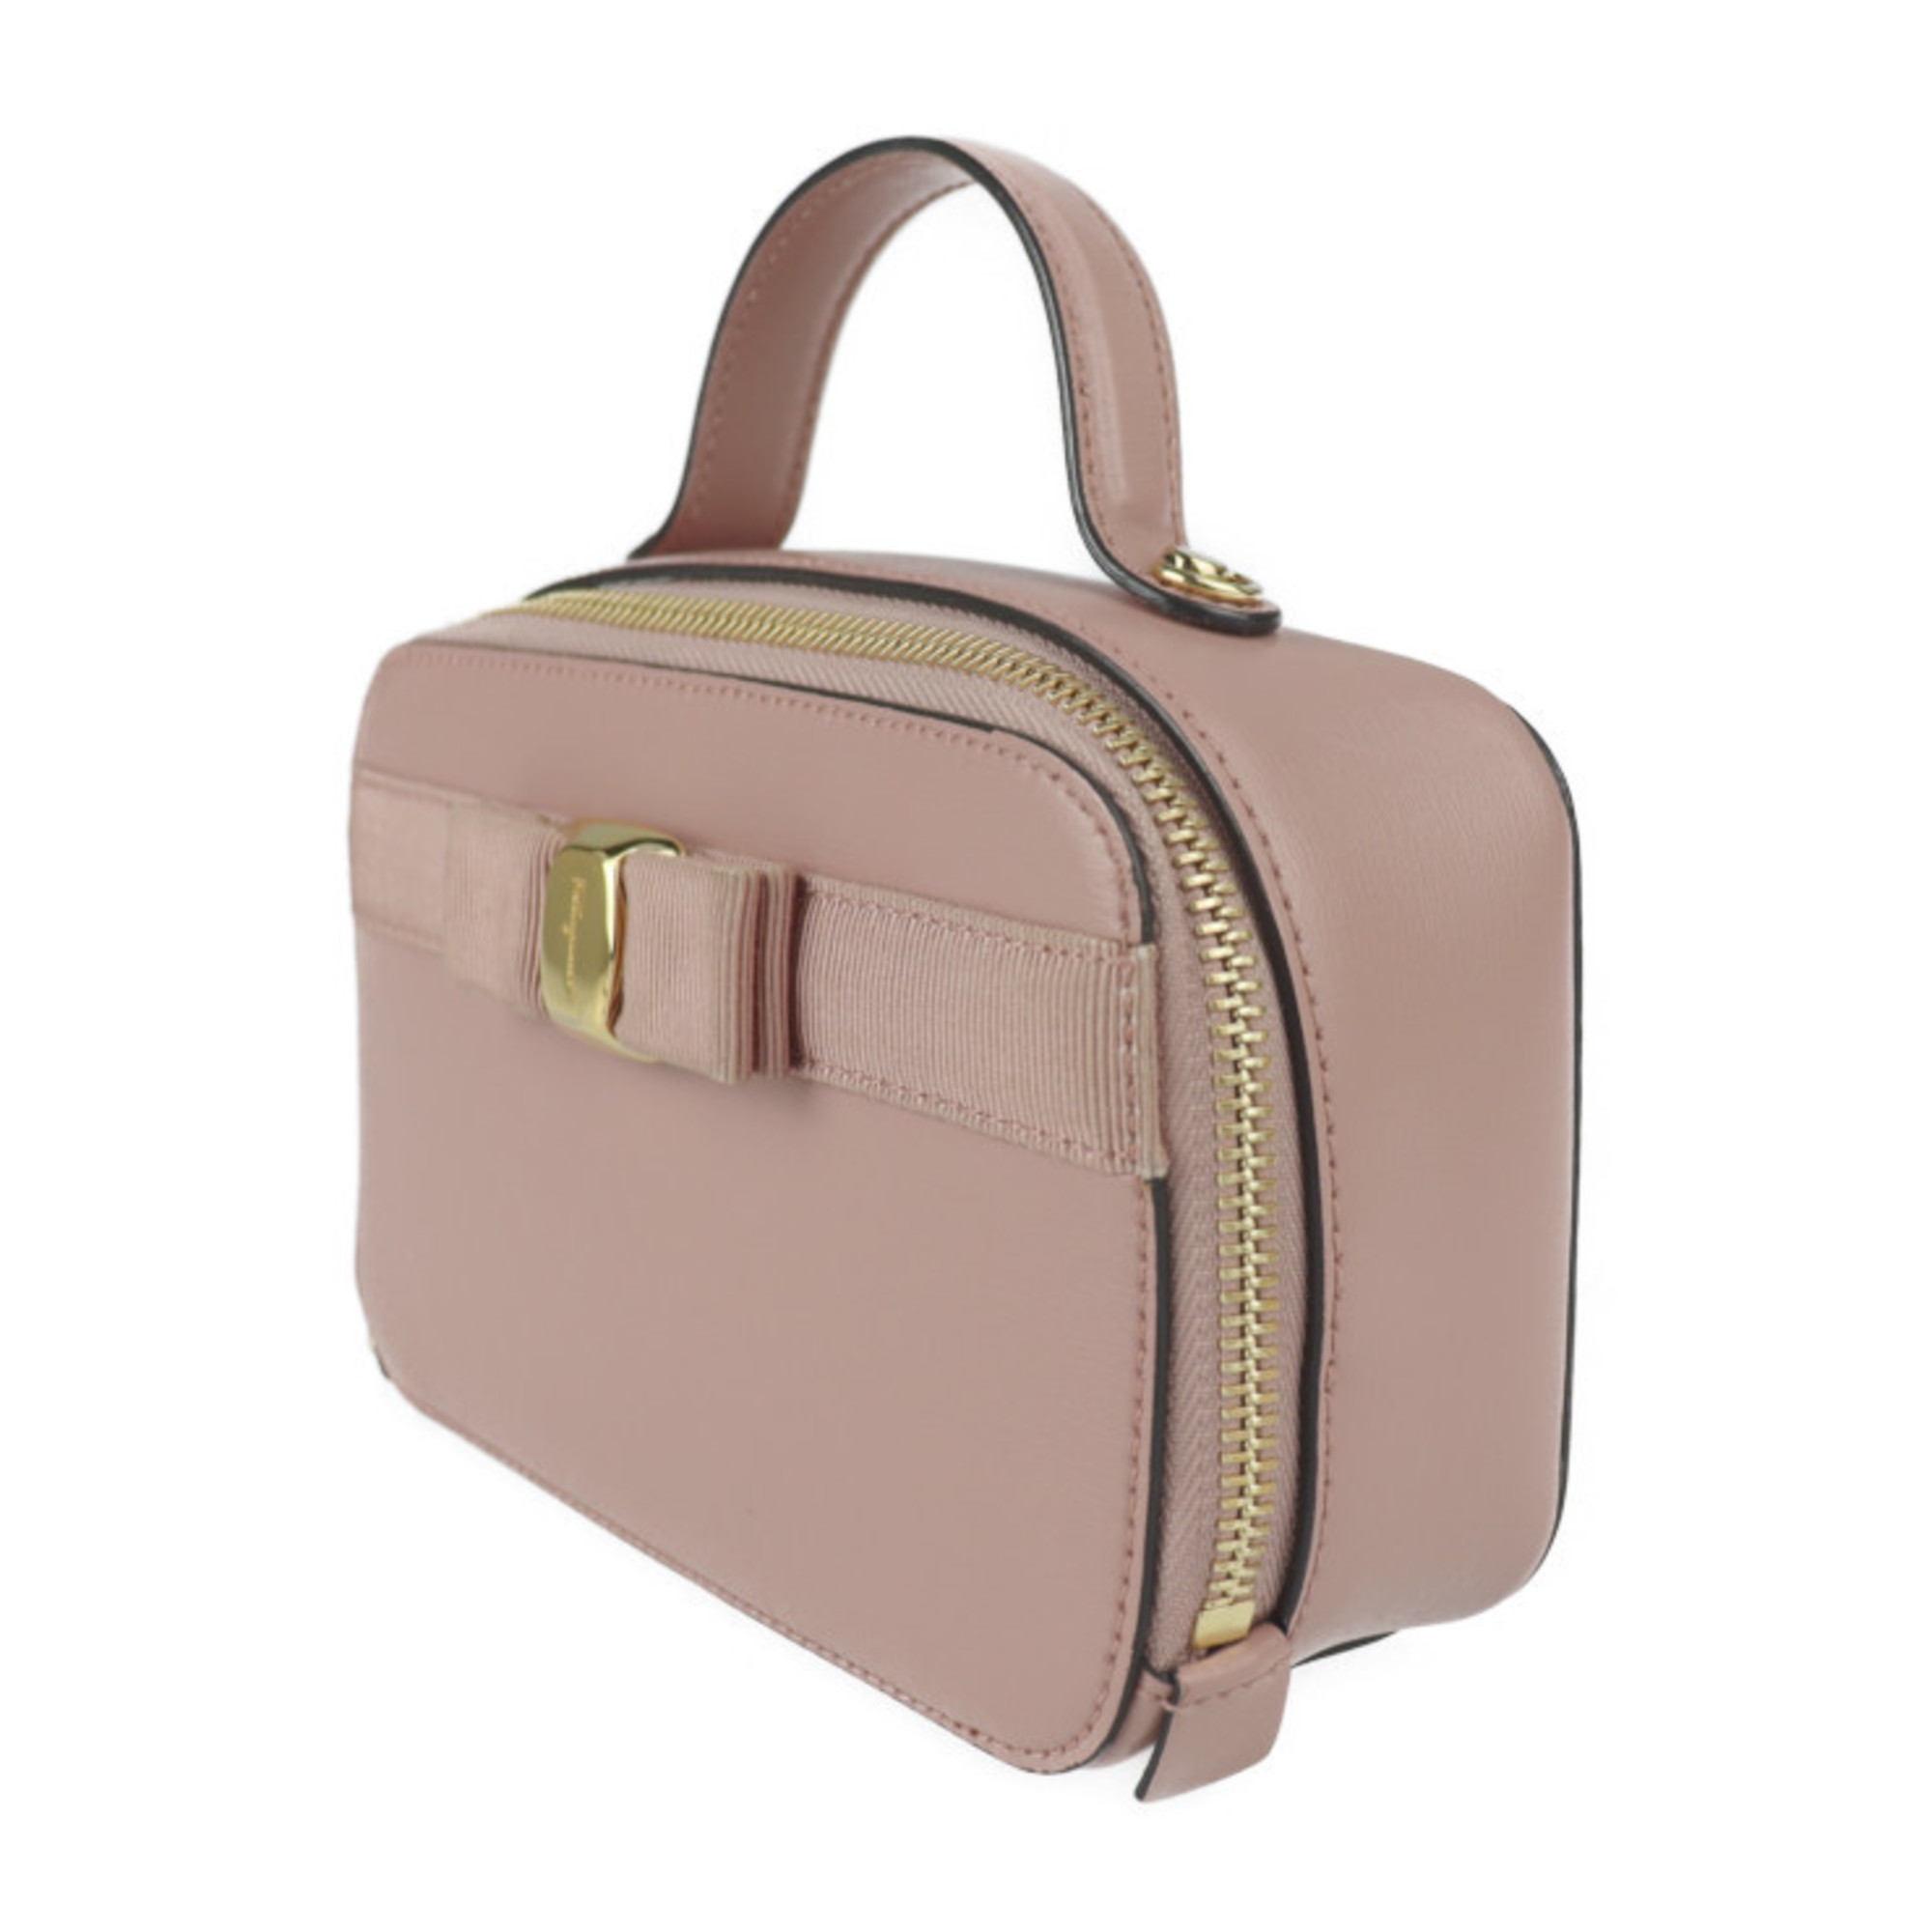 Salvatore Ferragamo Vara shoulder bag 22 E004 calf leather pink beige gold hardware 2WAY handbag pochette ribbon